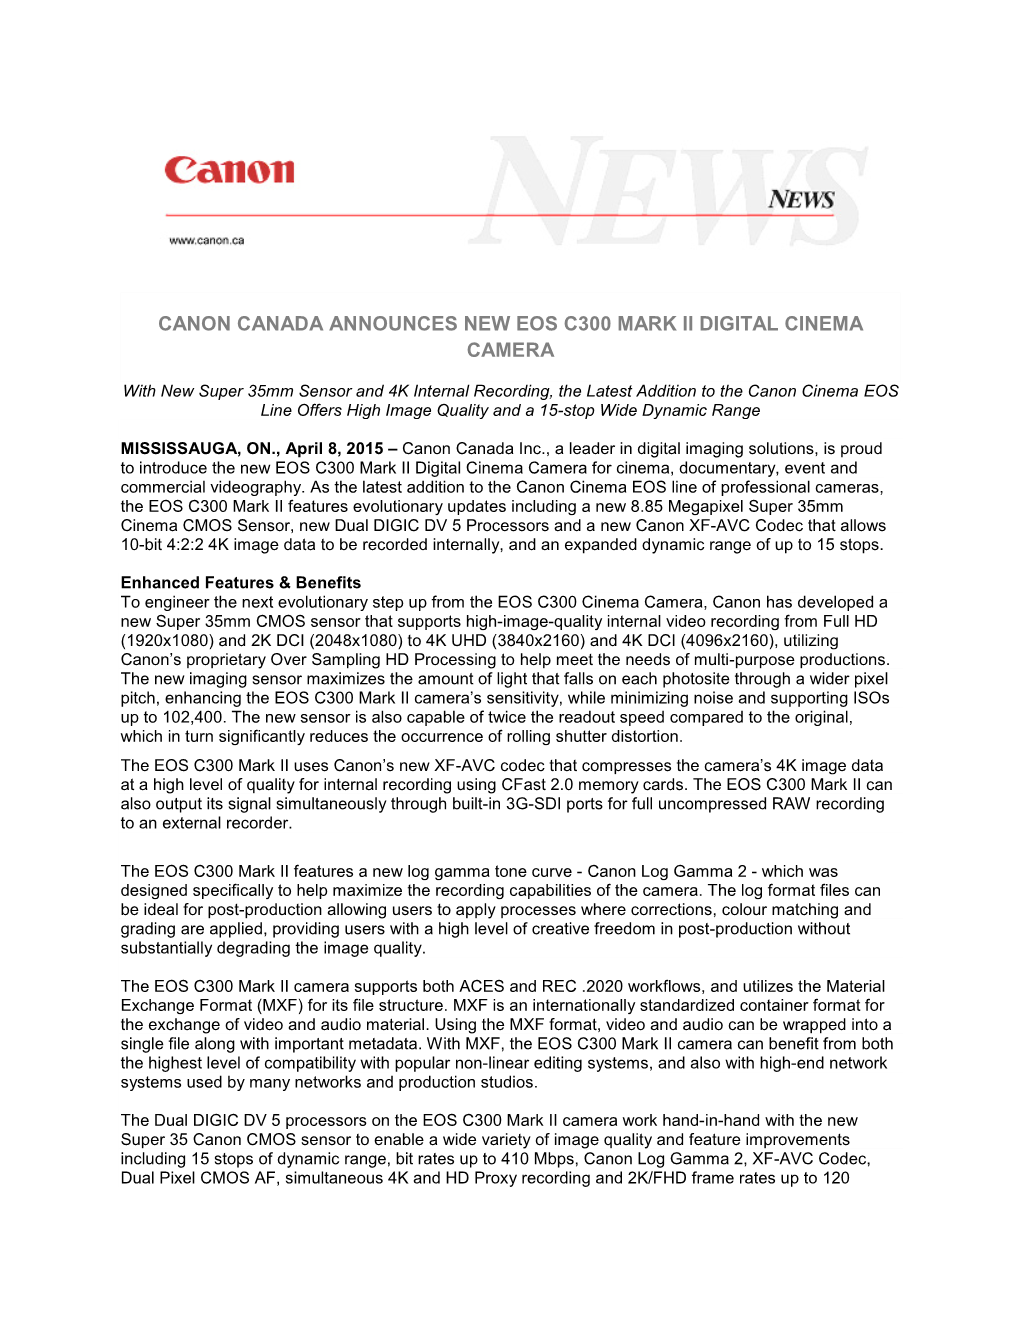 Canon Canada Announces New Eos C300 Mark Ii Digital Cinema Camera